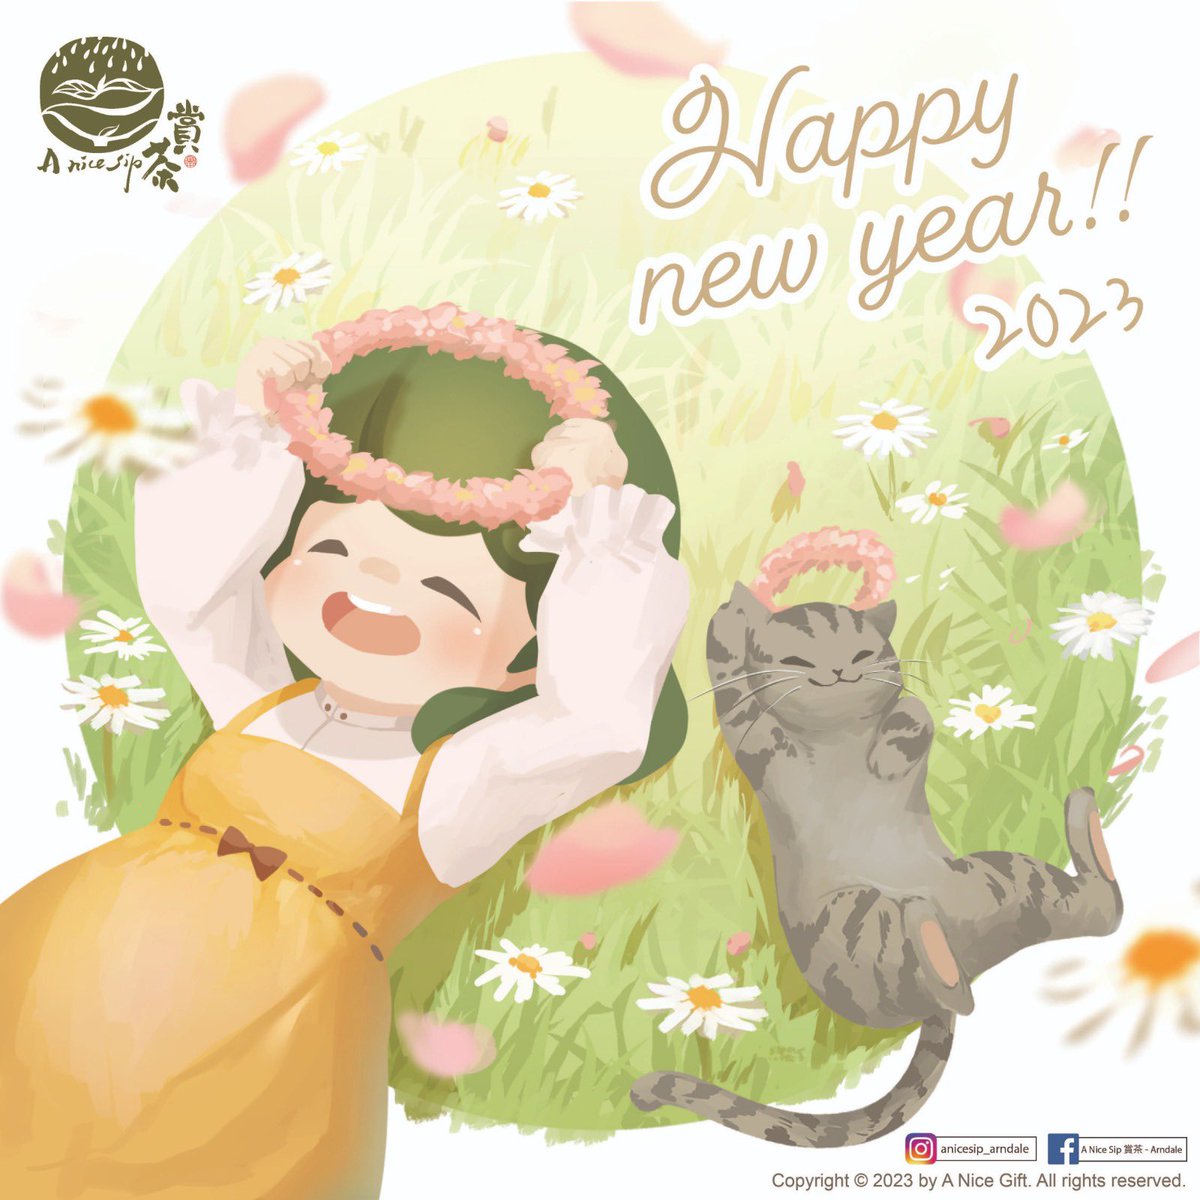 Happy New Year 2023 🎊🎉
______________________
#賞茶 #賞茶英國 #賞茶曼城 #ANiceSip #anicesip_arndale #賞茶anicesip_arndale #arndalemarket #bestofmcr #manchesterfoodies #mcrfoodie #mcrbubbletea #mcrbobatea #happynewyear2023